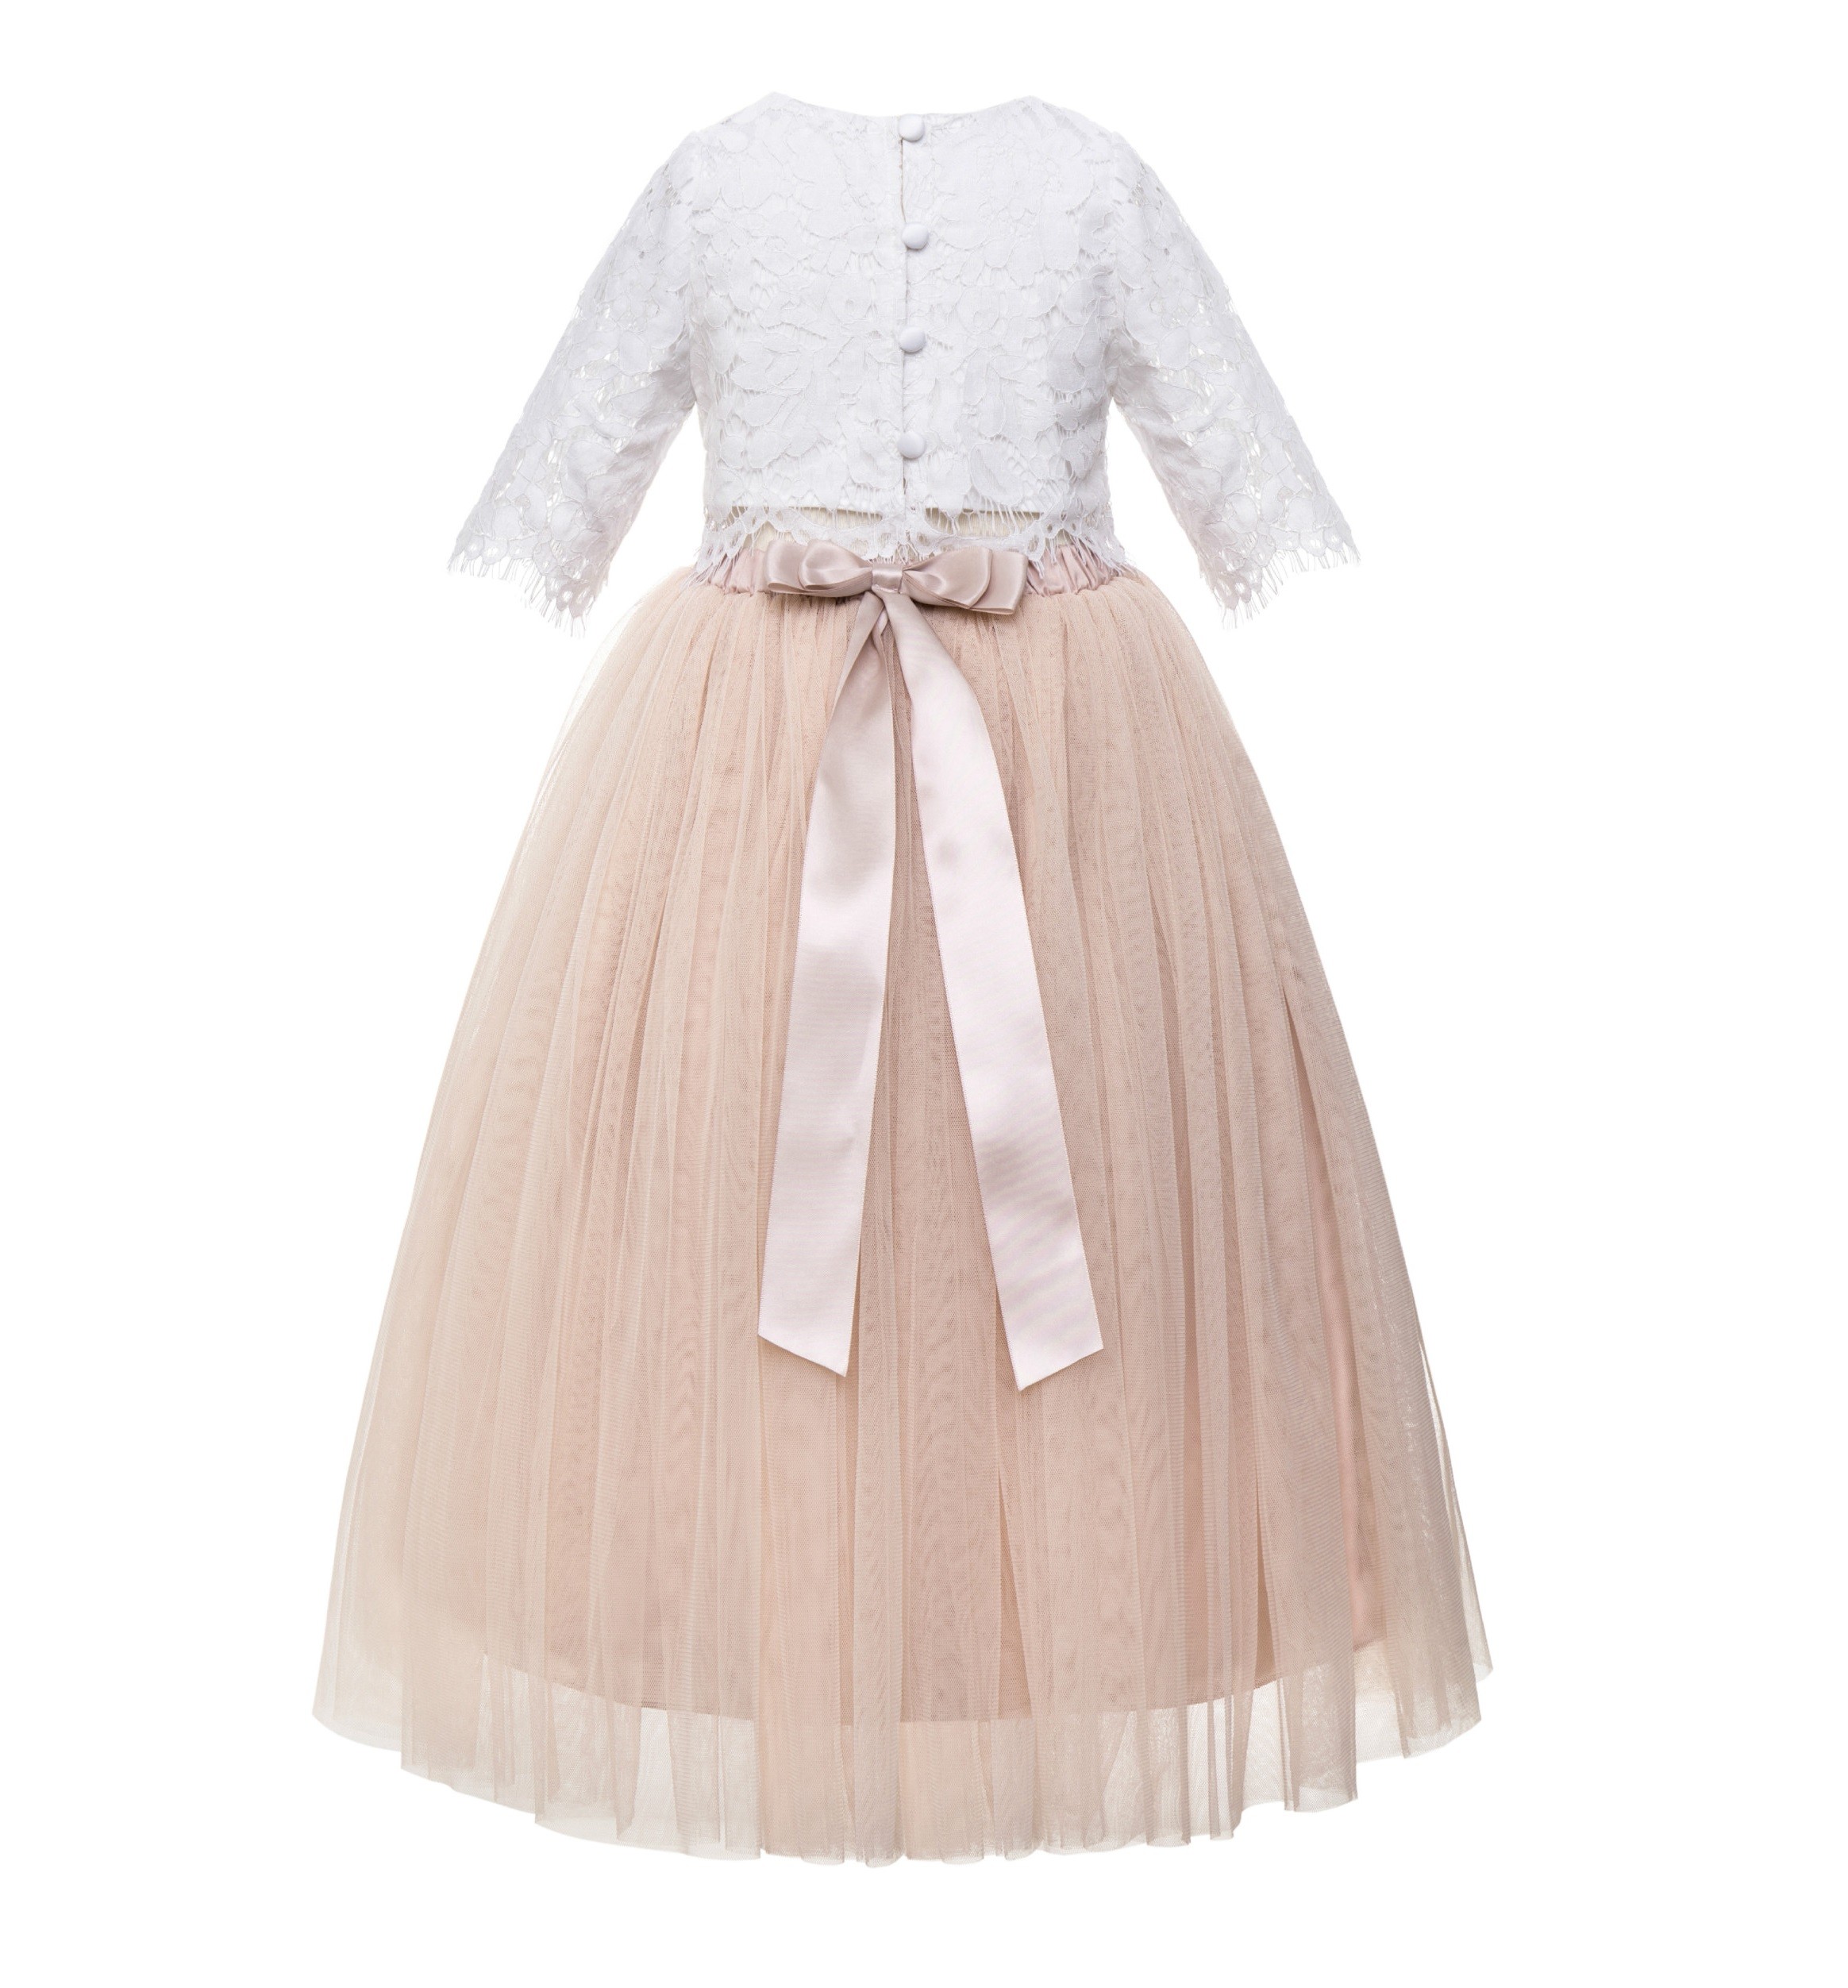 Blush PInk Eyelash Lace Flower Girl Dress A-Line Tulle Dress LG5